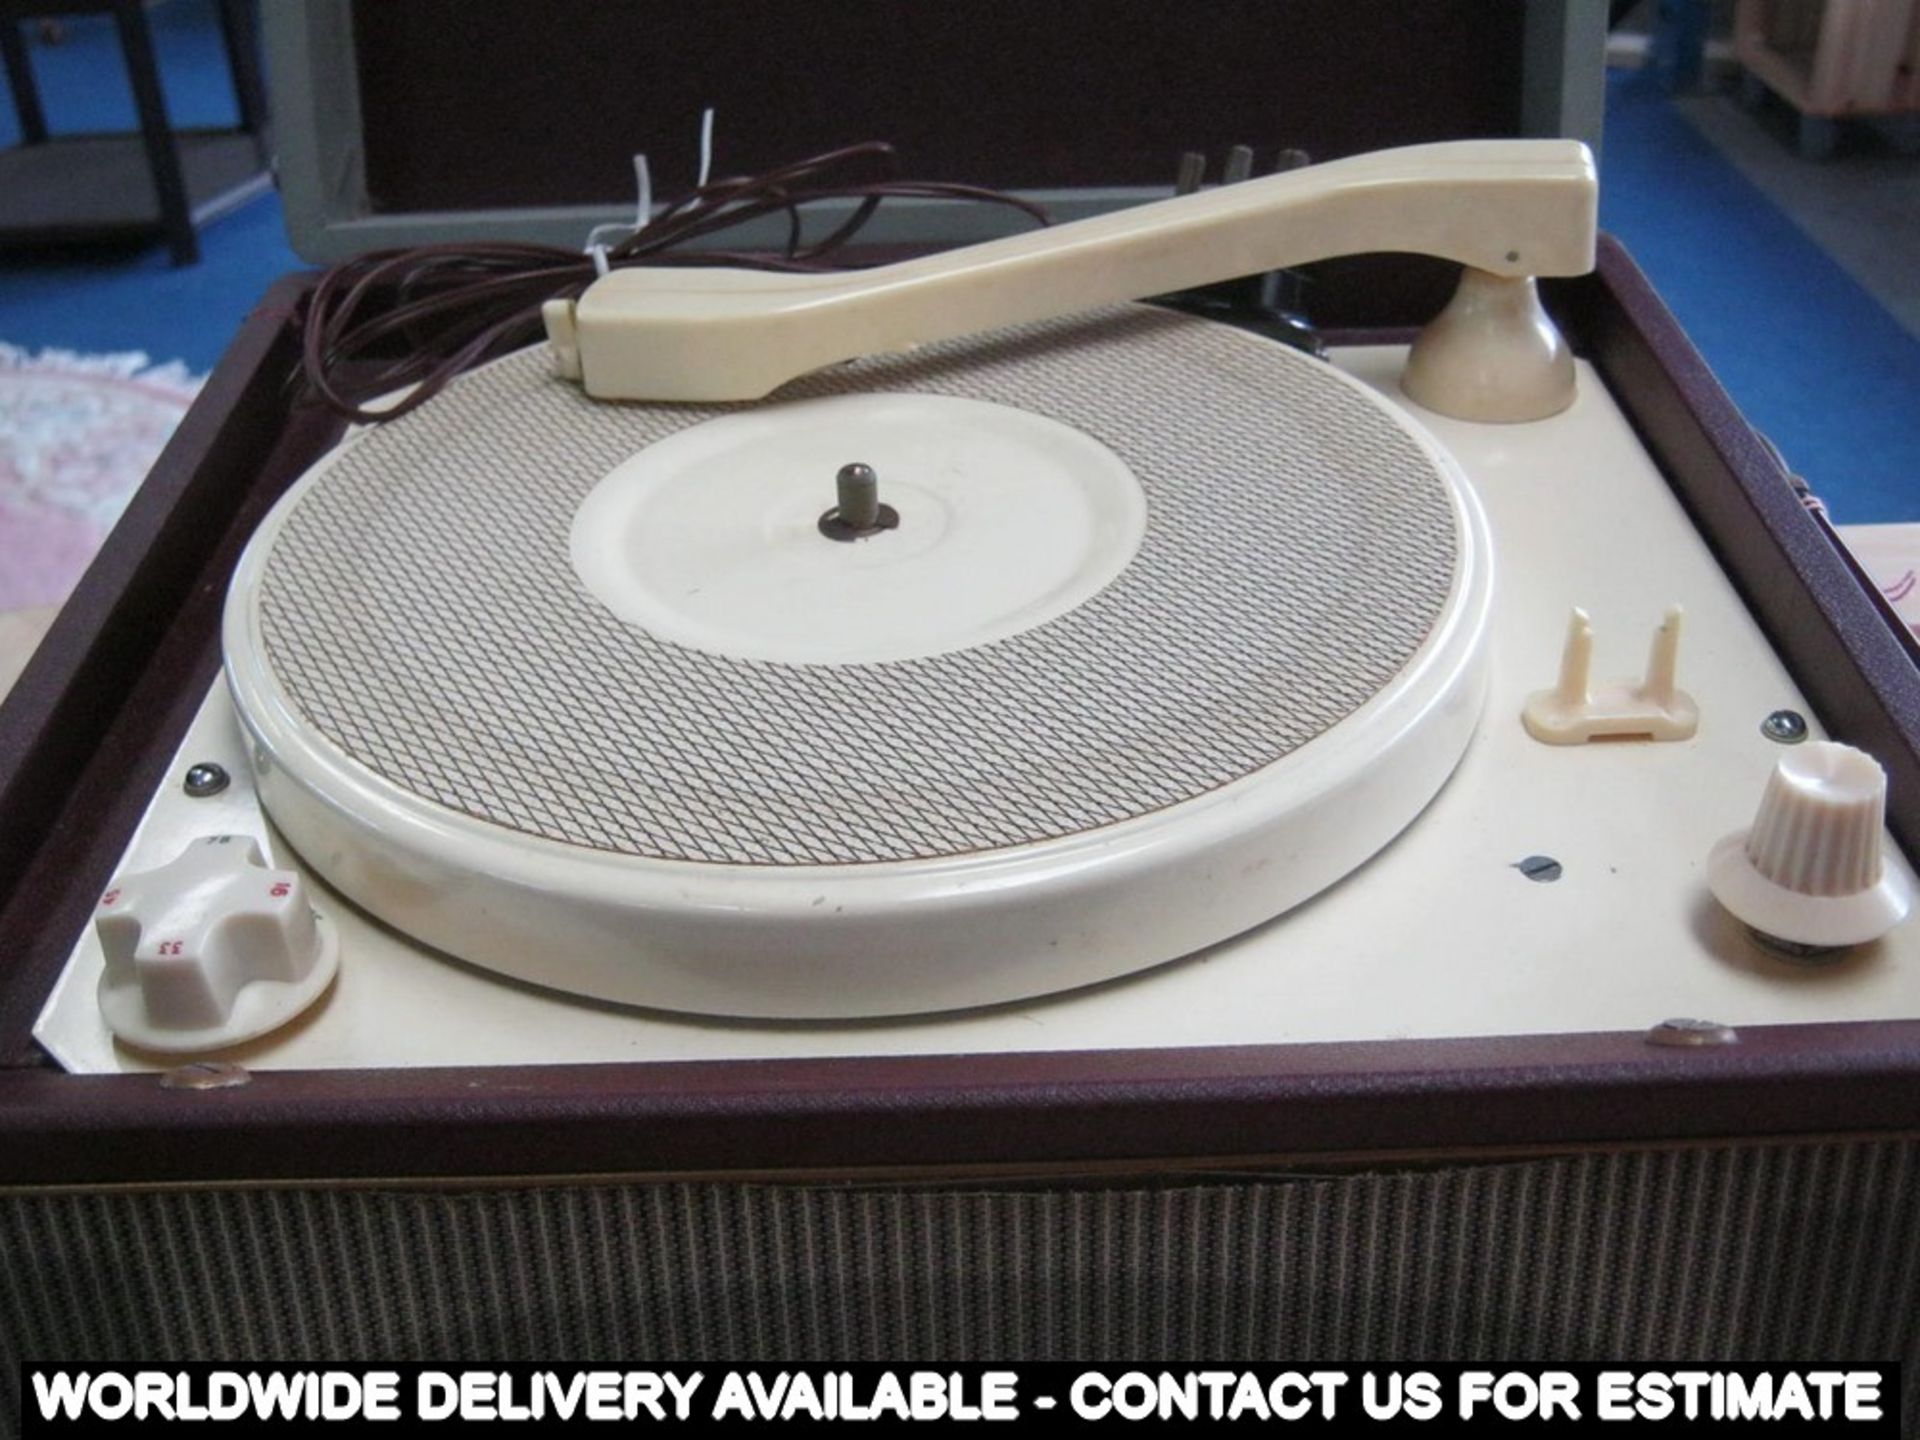 Emisonic record player vintage 1950's - four speeds - 16/33/45/78 - Image 2 of 3